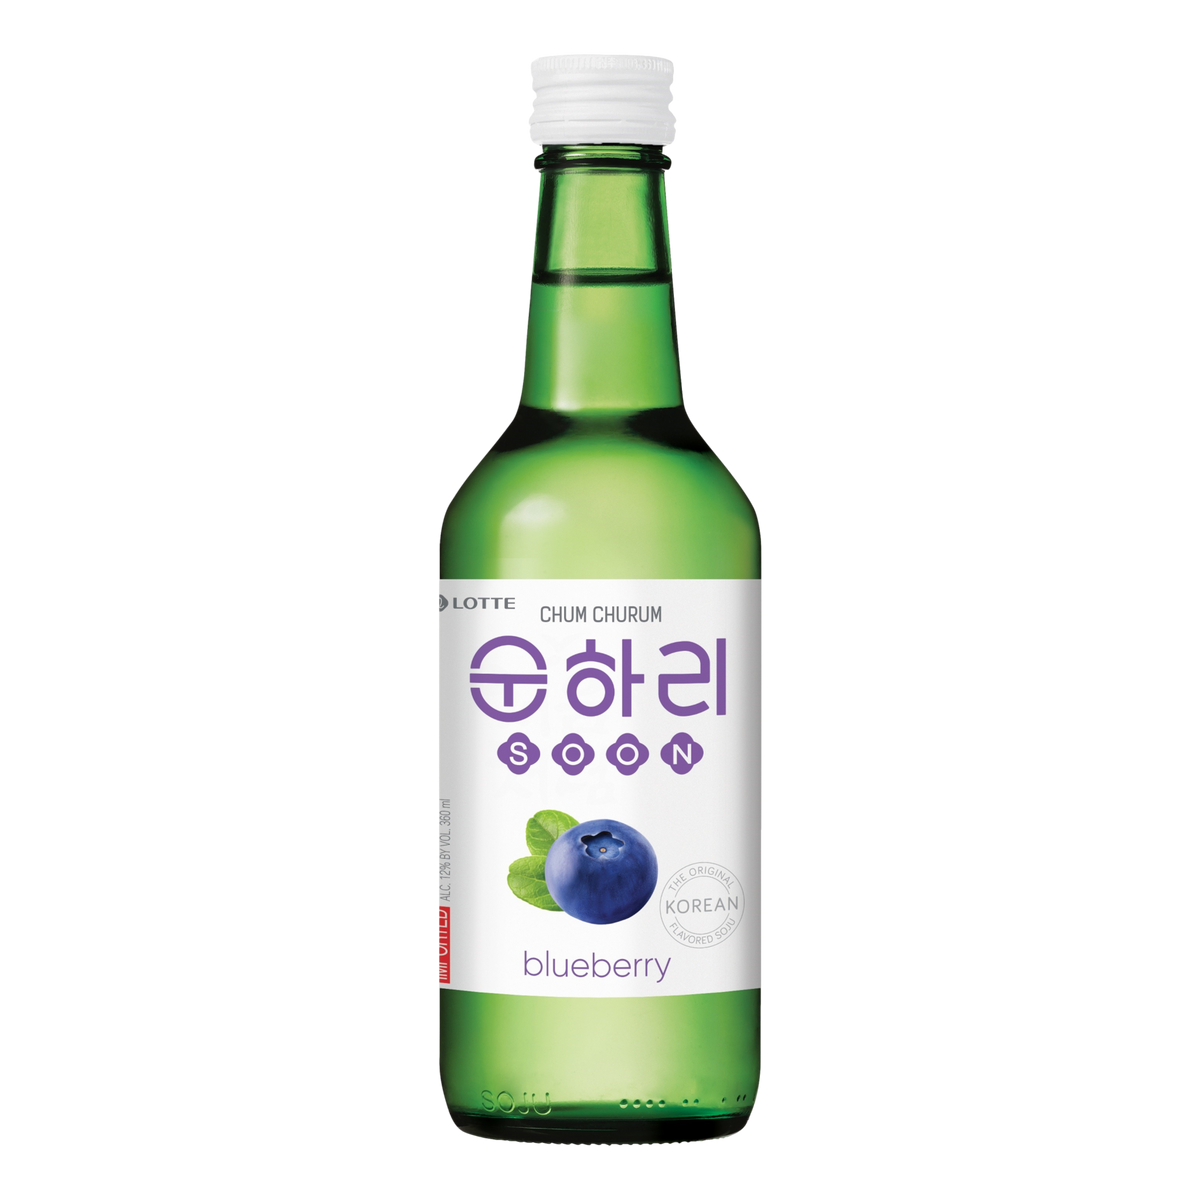 Lotte Chum Churum Blueberry Soju 360ml Bottle Single - Camperdown Cellars